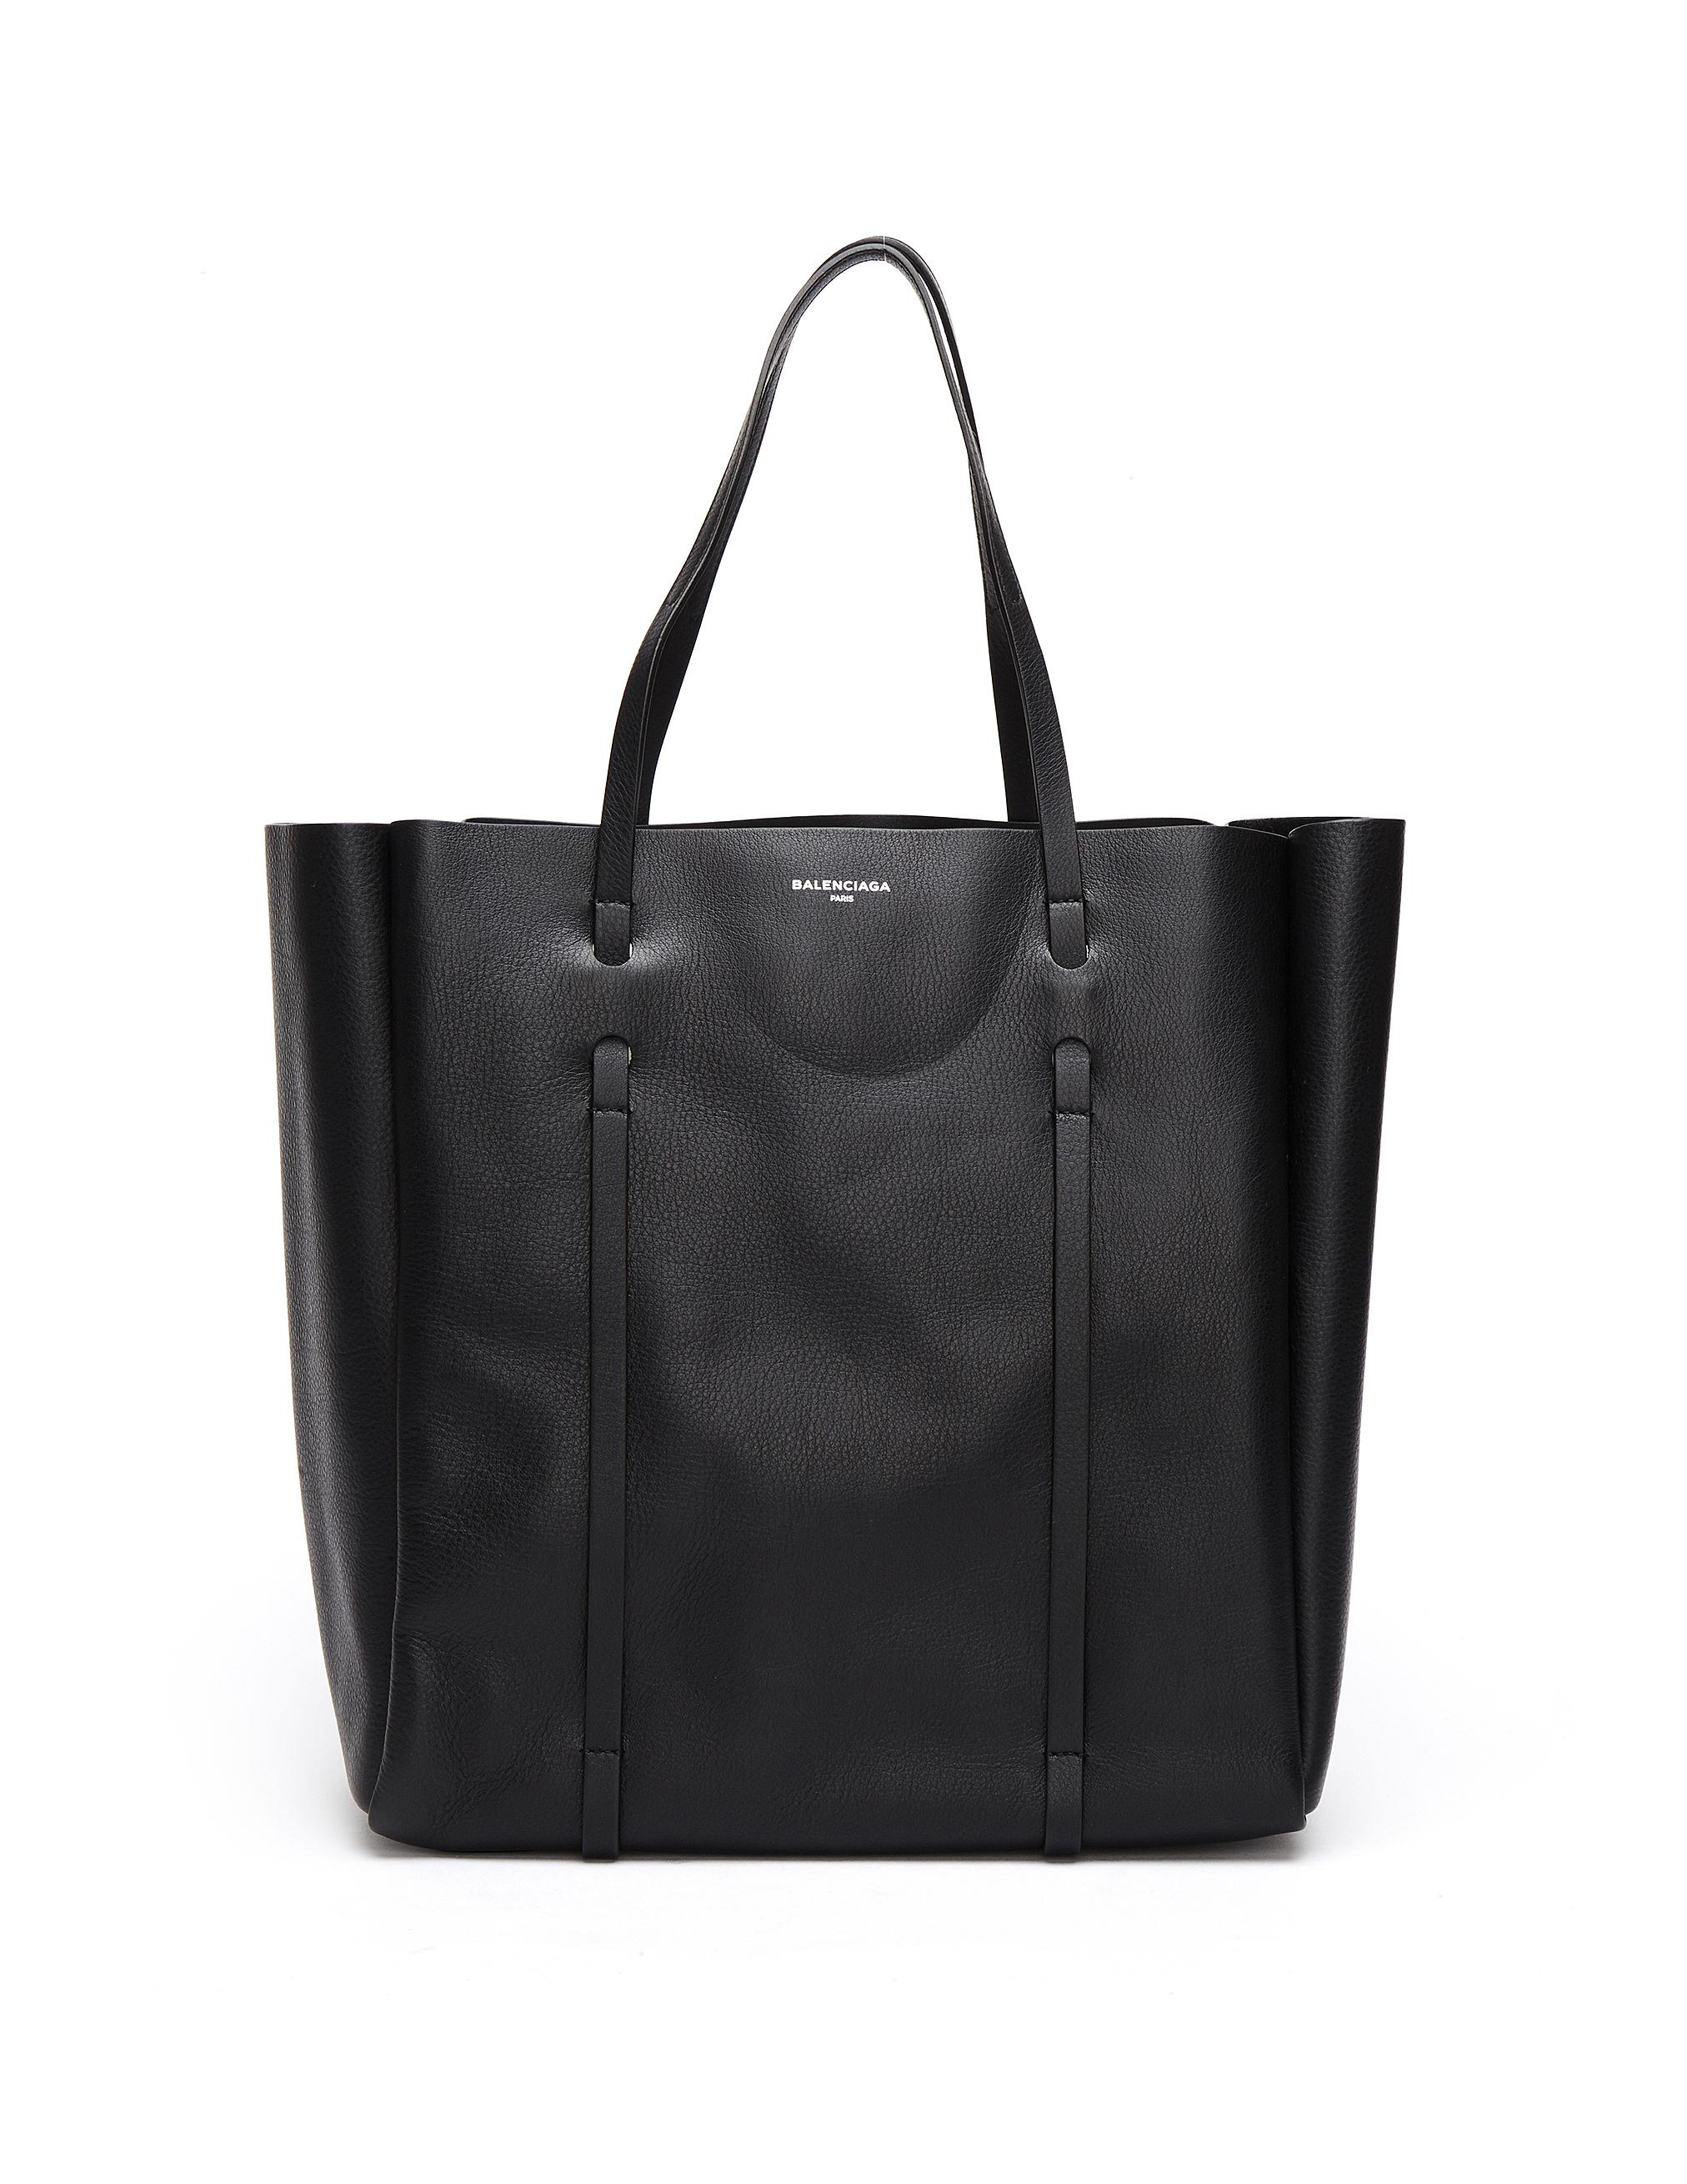 Lyst - Balenciaga Everyday Tote L Bag in Black